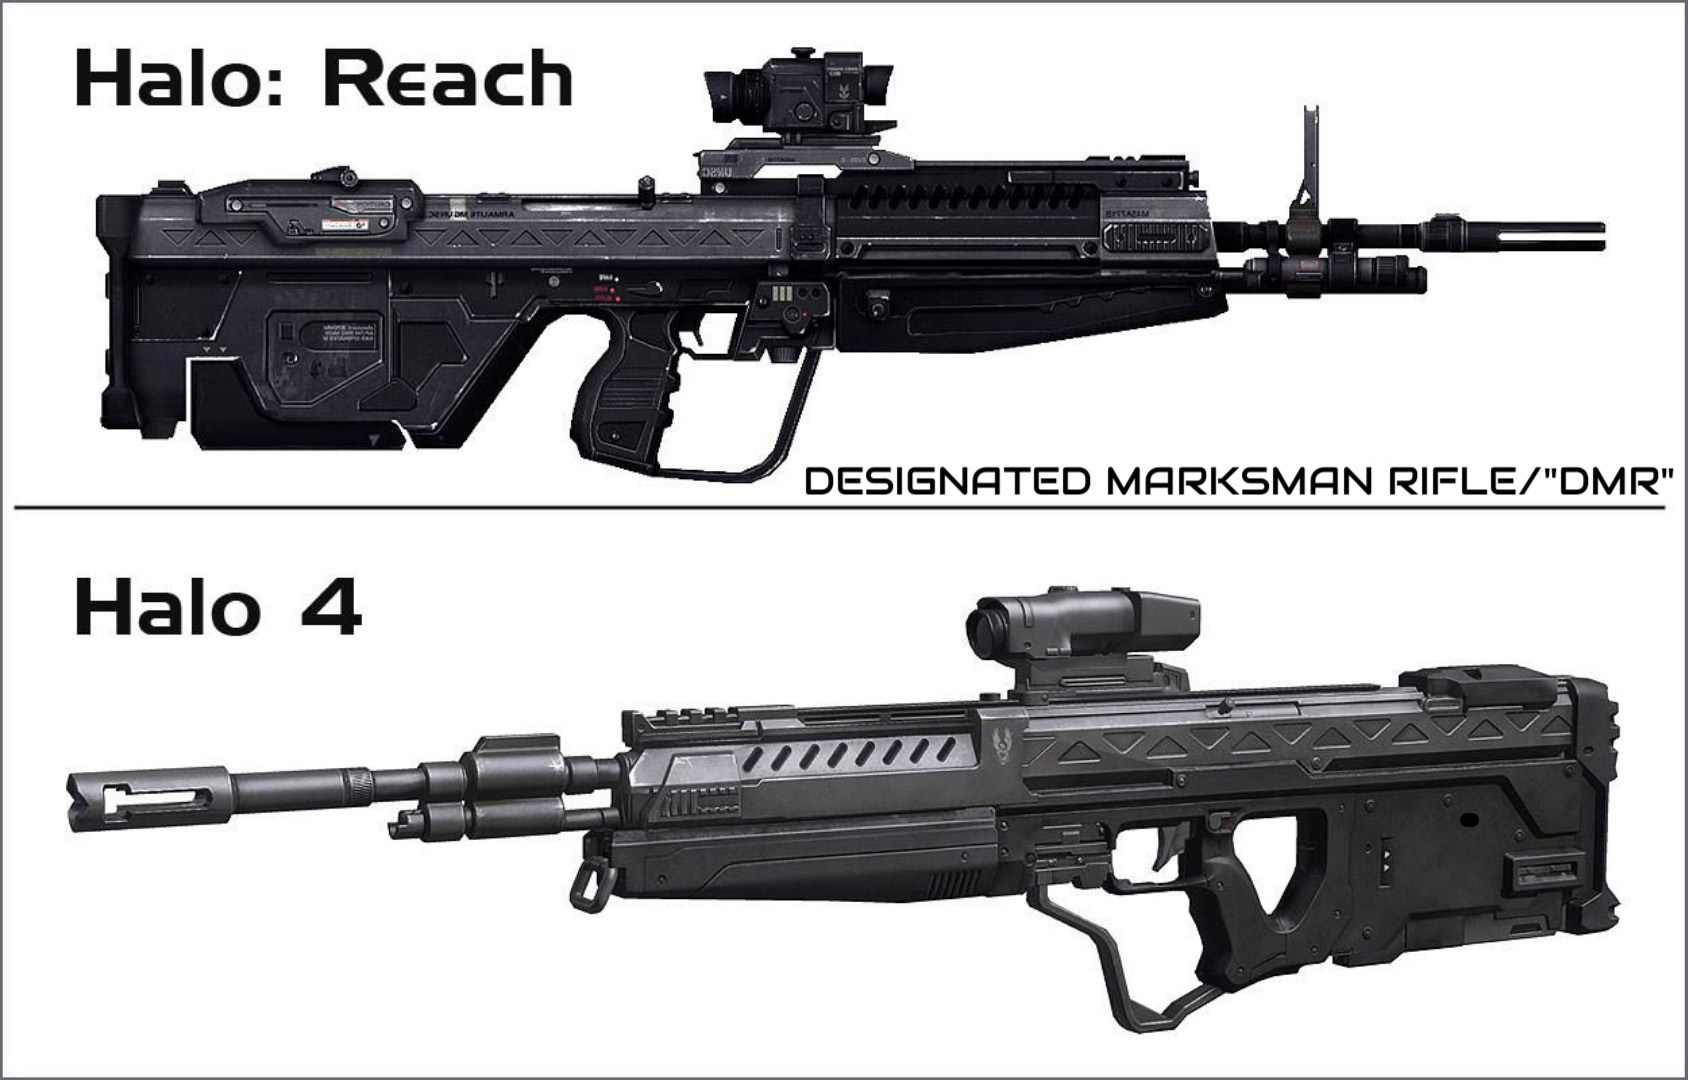 Video game battle rifles